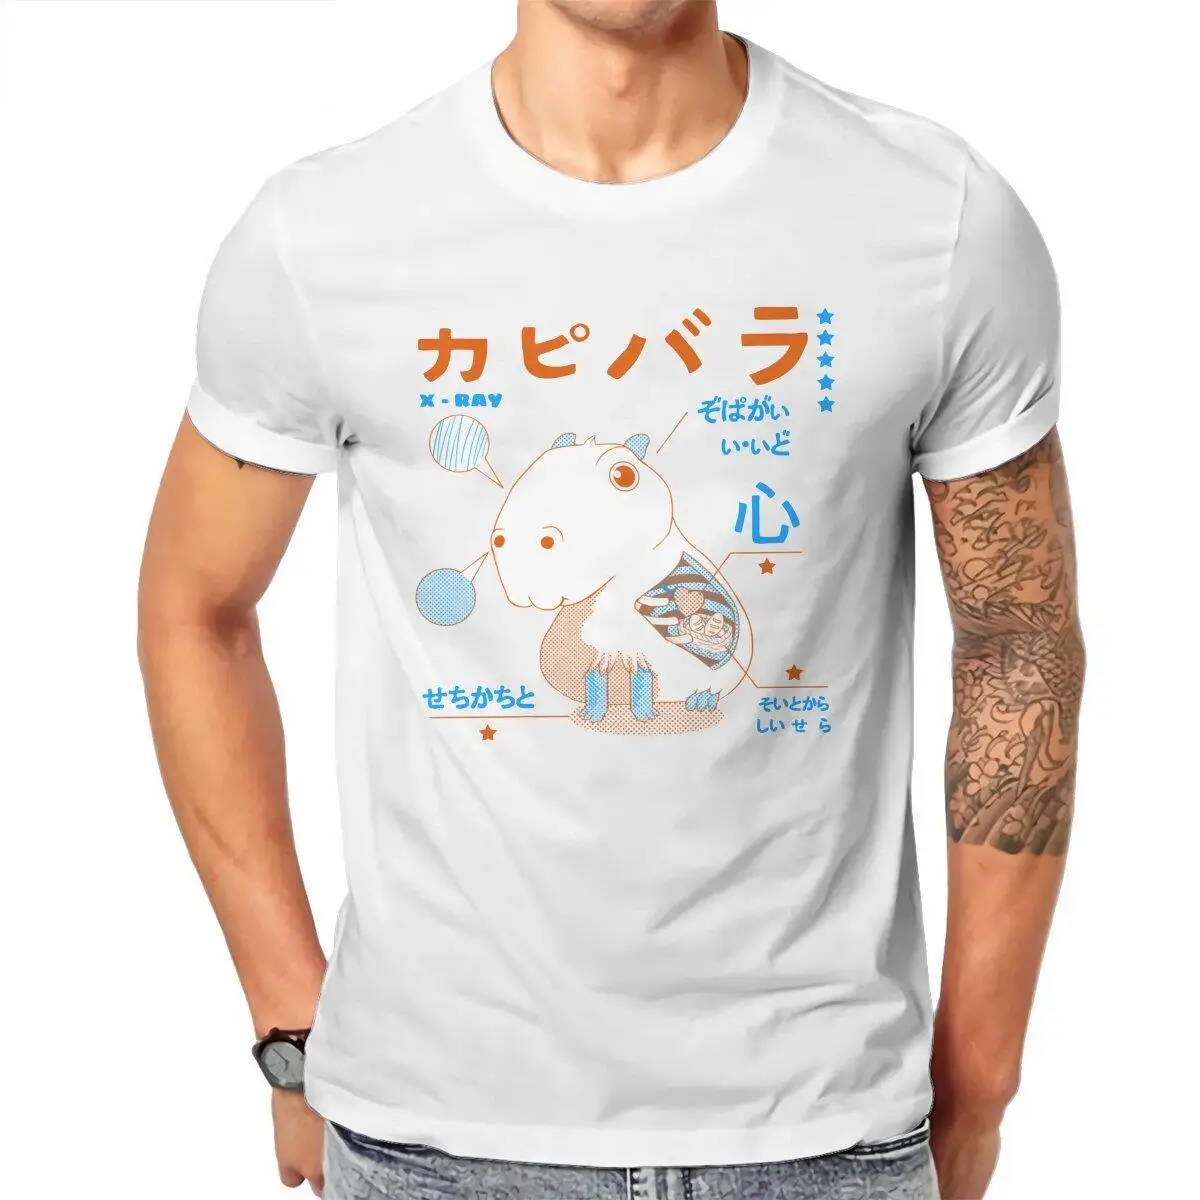 Capybara Capy X-Ray  T-Shirt Men  Vintage Cotton Tee Shirt Crewneck Short Sleeve T Shirt Plus Size Clothes